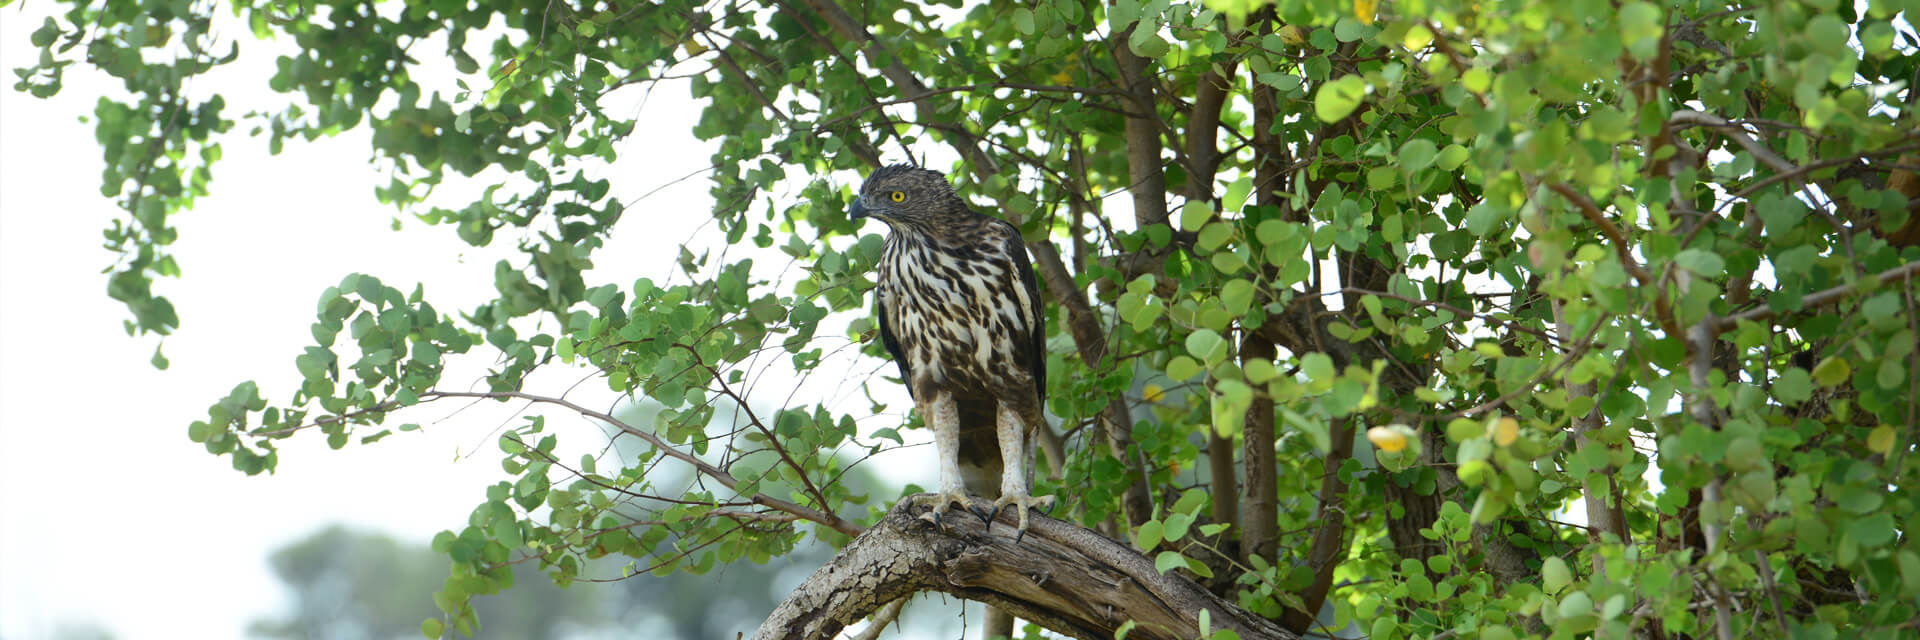 udawalawe hotels sri lanka - Udawalawe National Park - Bird Watching Udawalawe